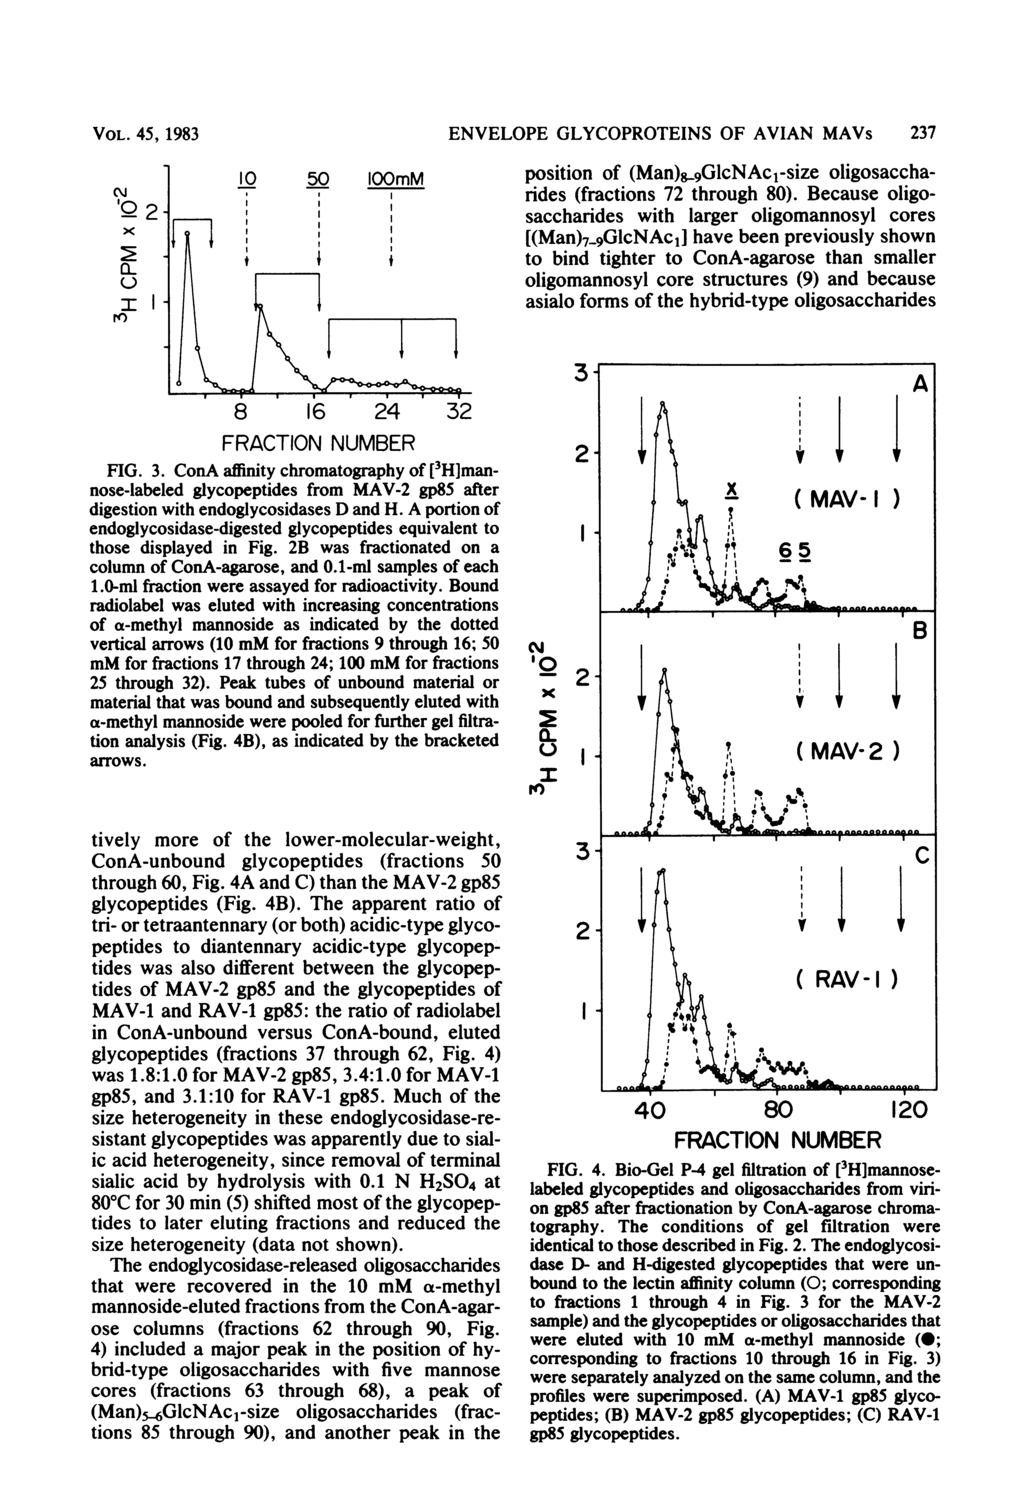 VOL. 45, 1983 2- x 10 I-) a:ii 10 50 loomm t I i ENVELOPE GLYCOPROTEINS OF AVIAN MAVs 237 position of (Man)89GlcNAc1-size oligosaccharides (fractions 72 through 80).